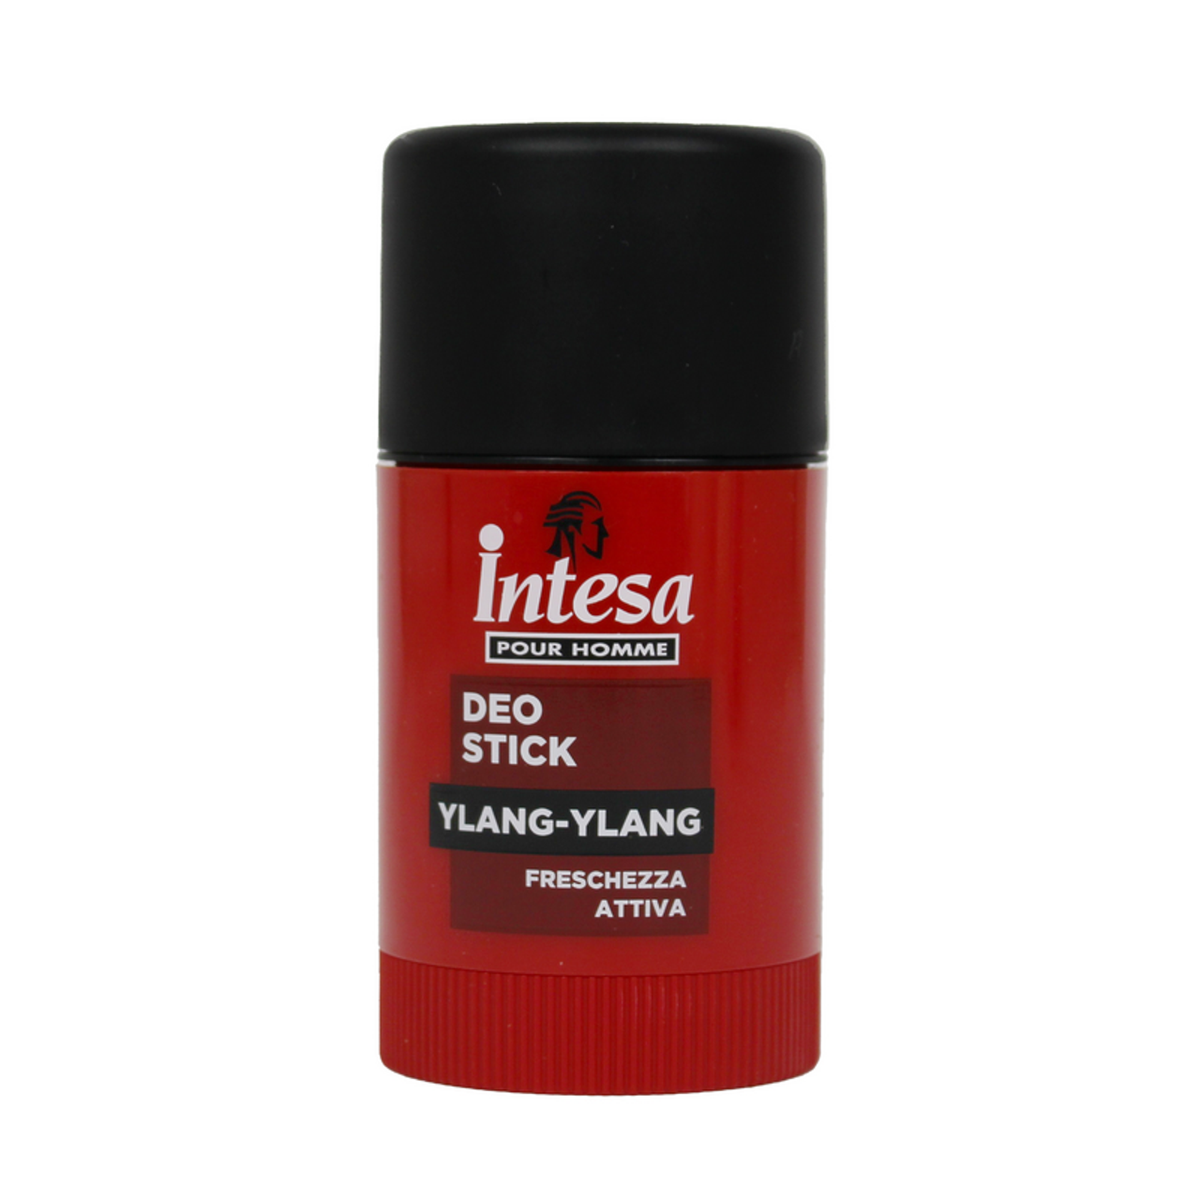 Intesa pour homme deodorante palico ylang ylang 75 ml